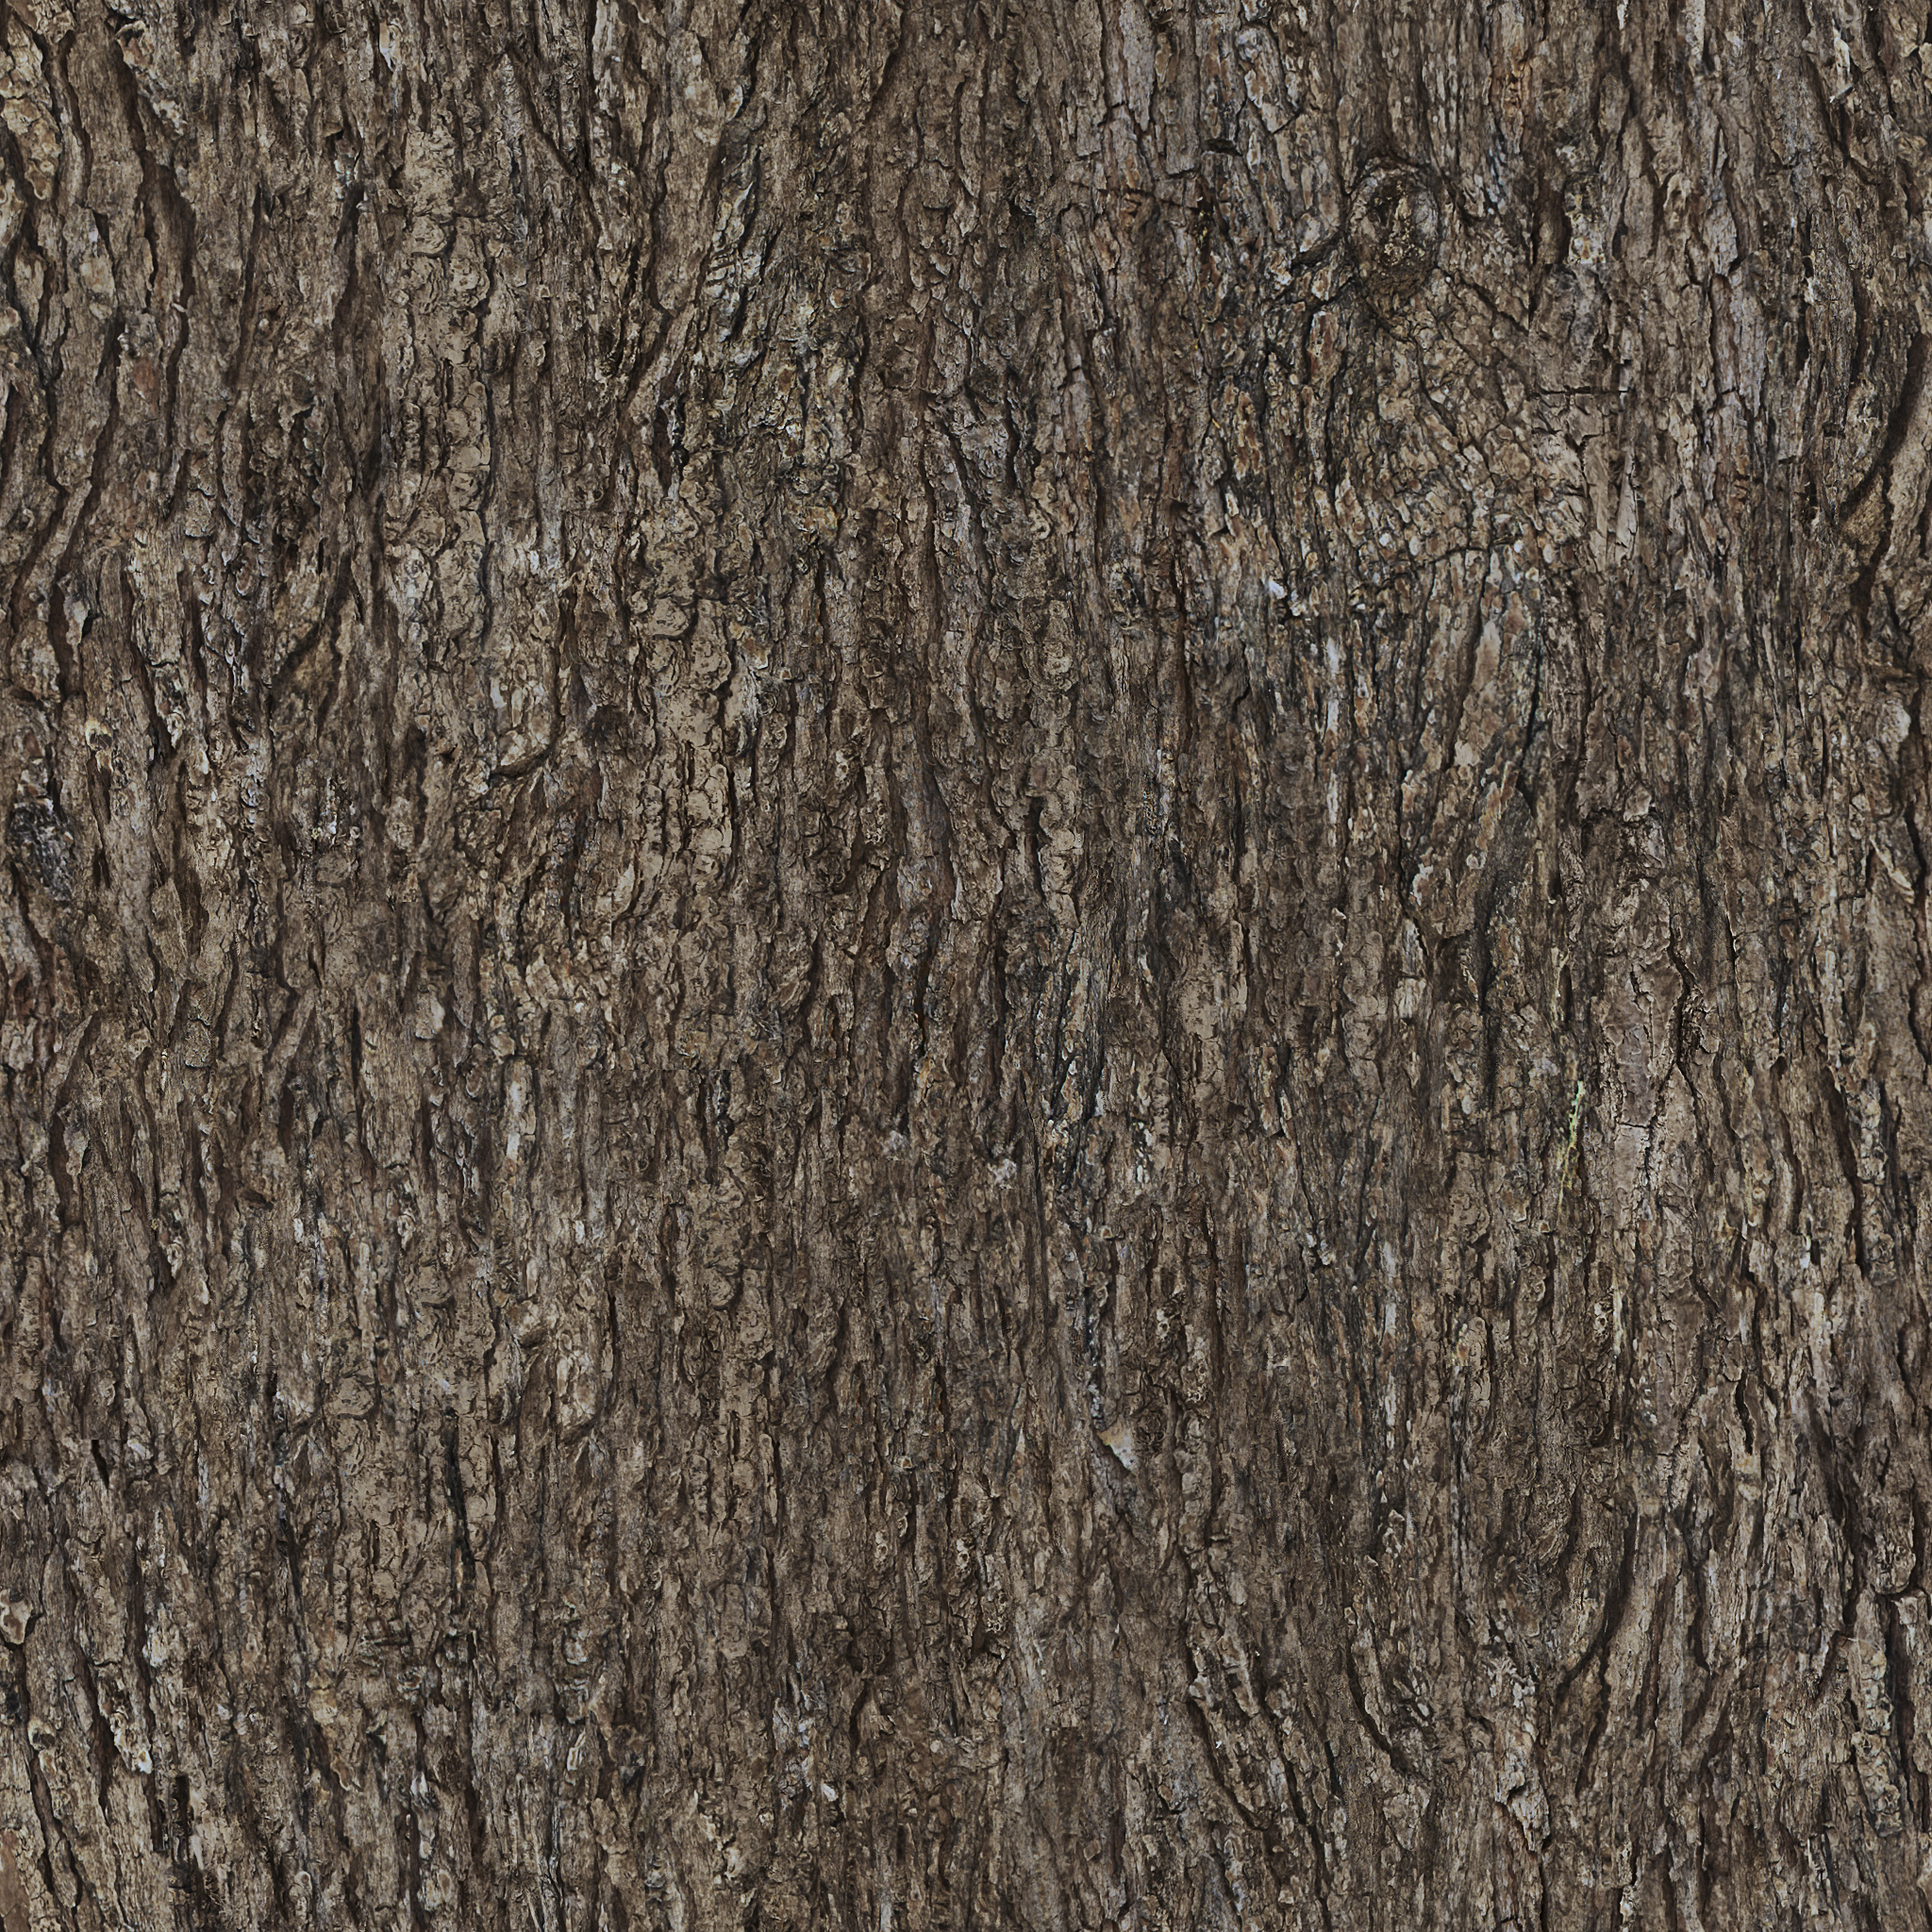 tileable_tree_bark_texture_by_ftourini-d3l69hz.jpg